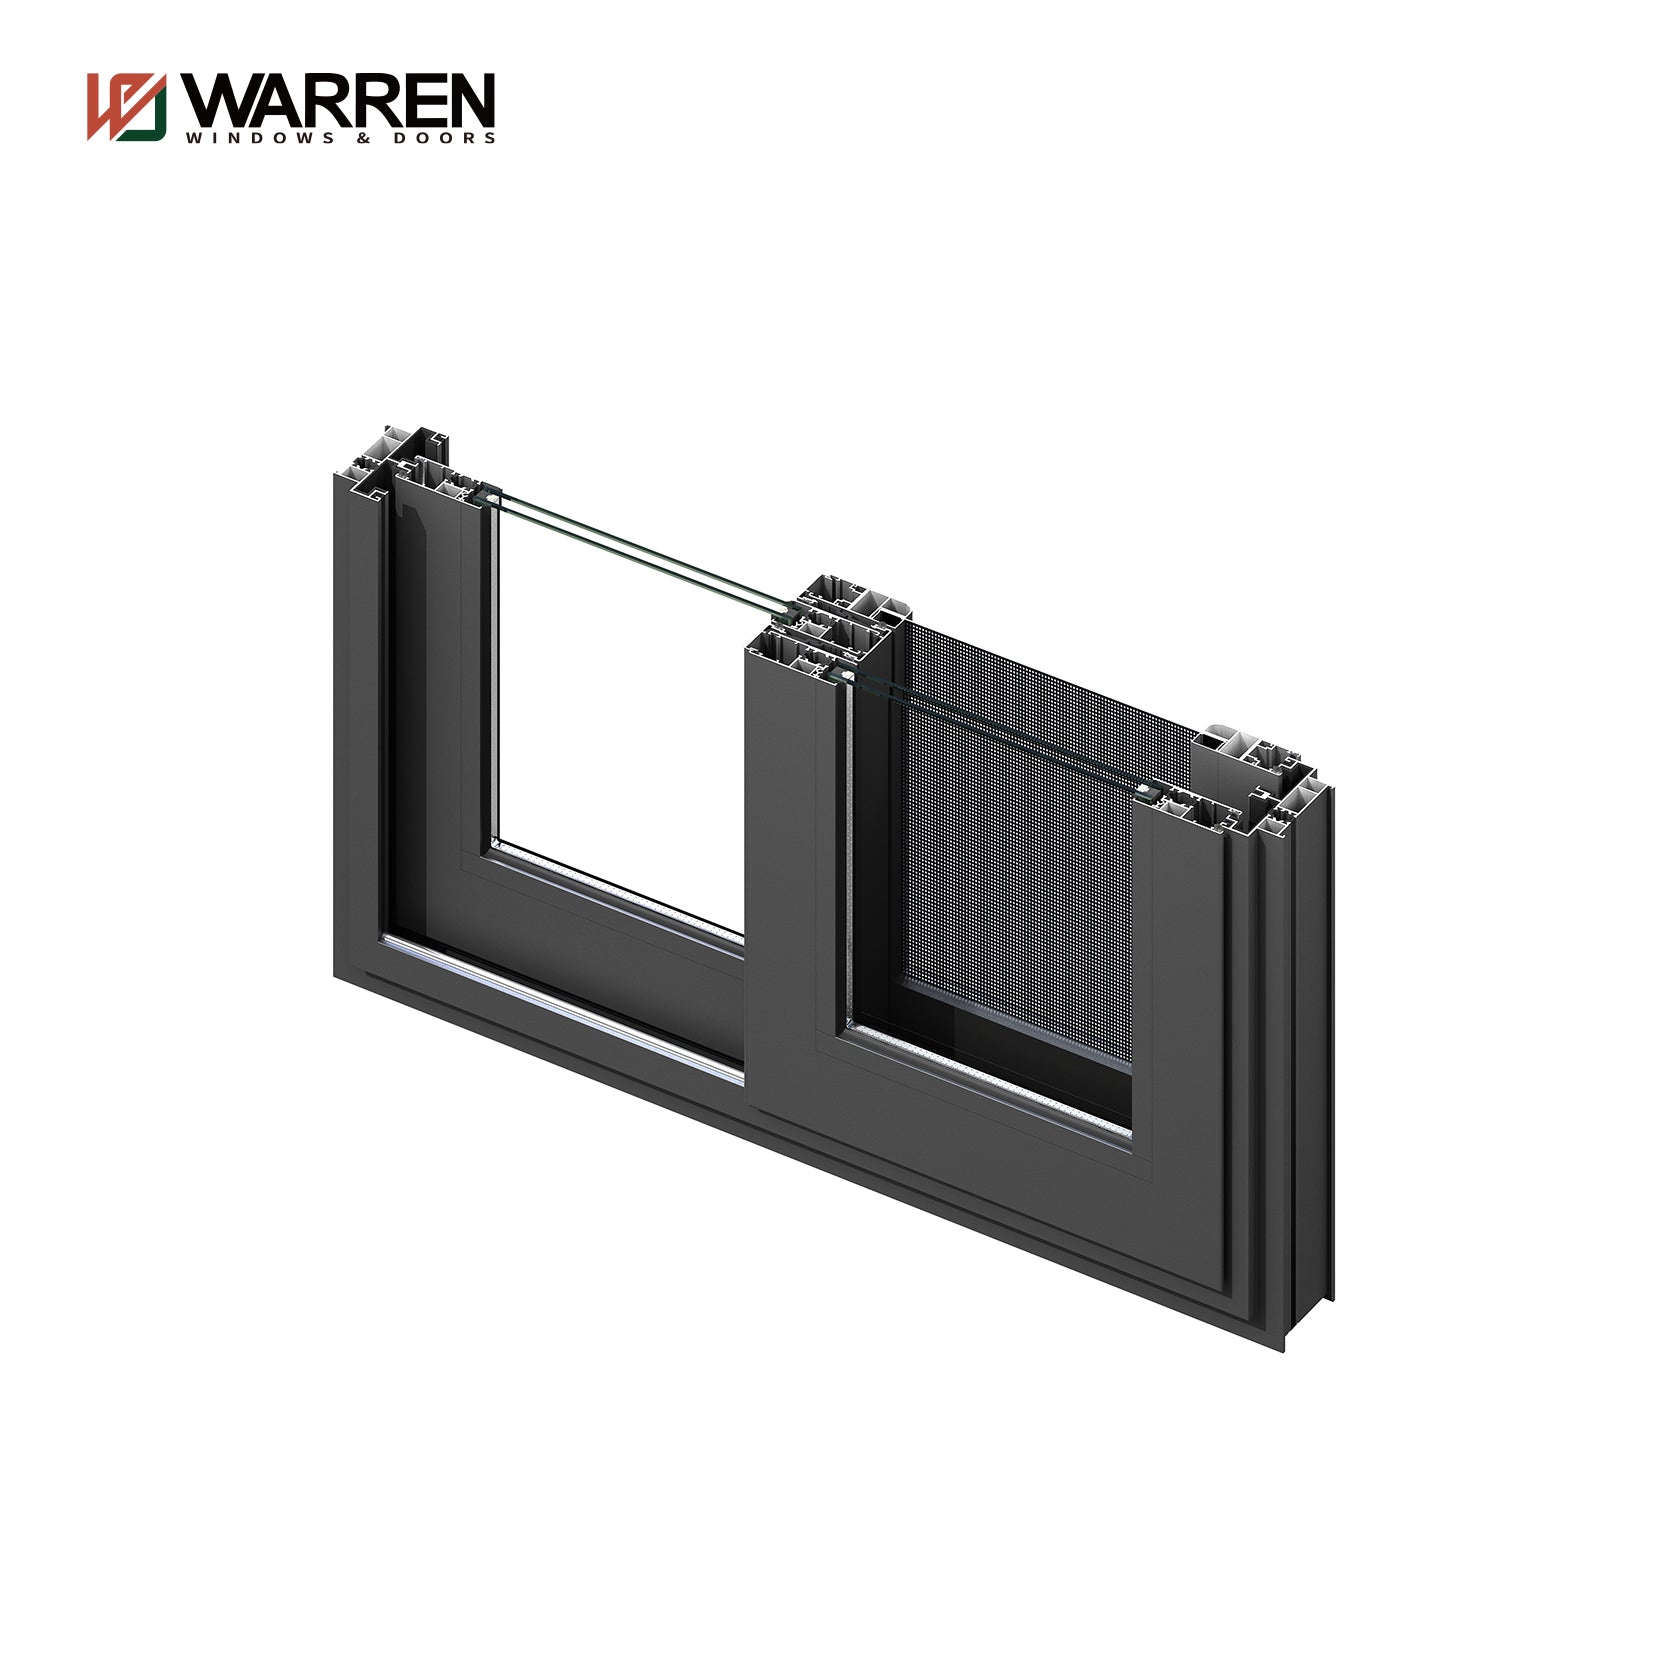 Warren Sliding Window Design High Quality Home Shutters Aluminum Window Tempered Glass Sliding Windows